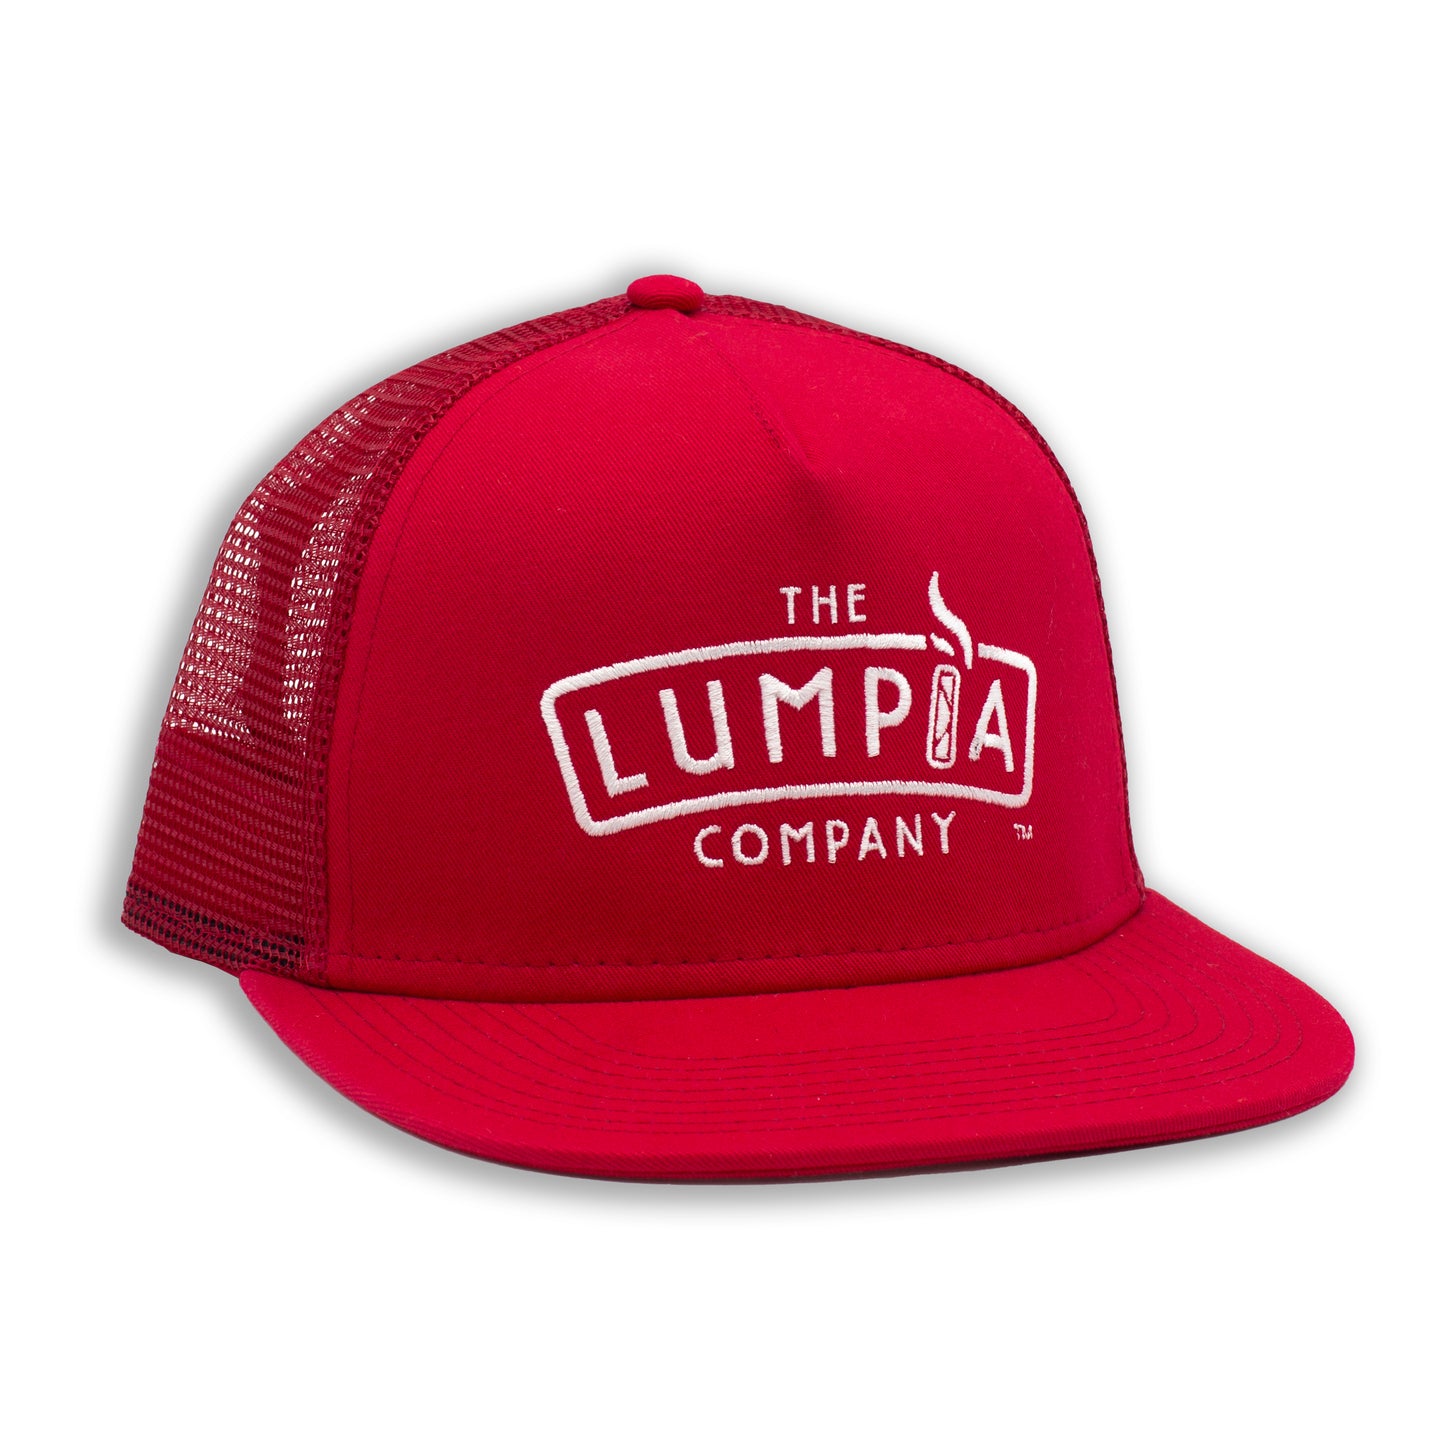 The Lumpia Company Red Trucker Hat